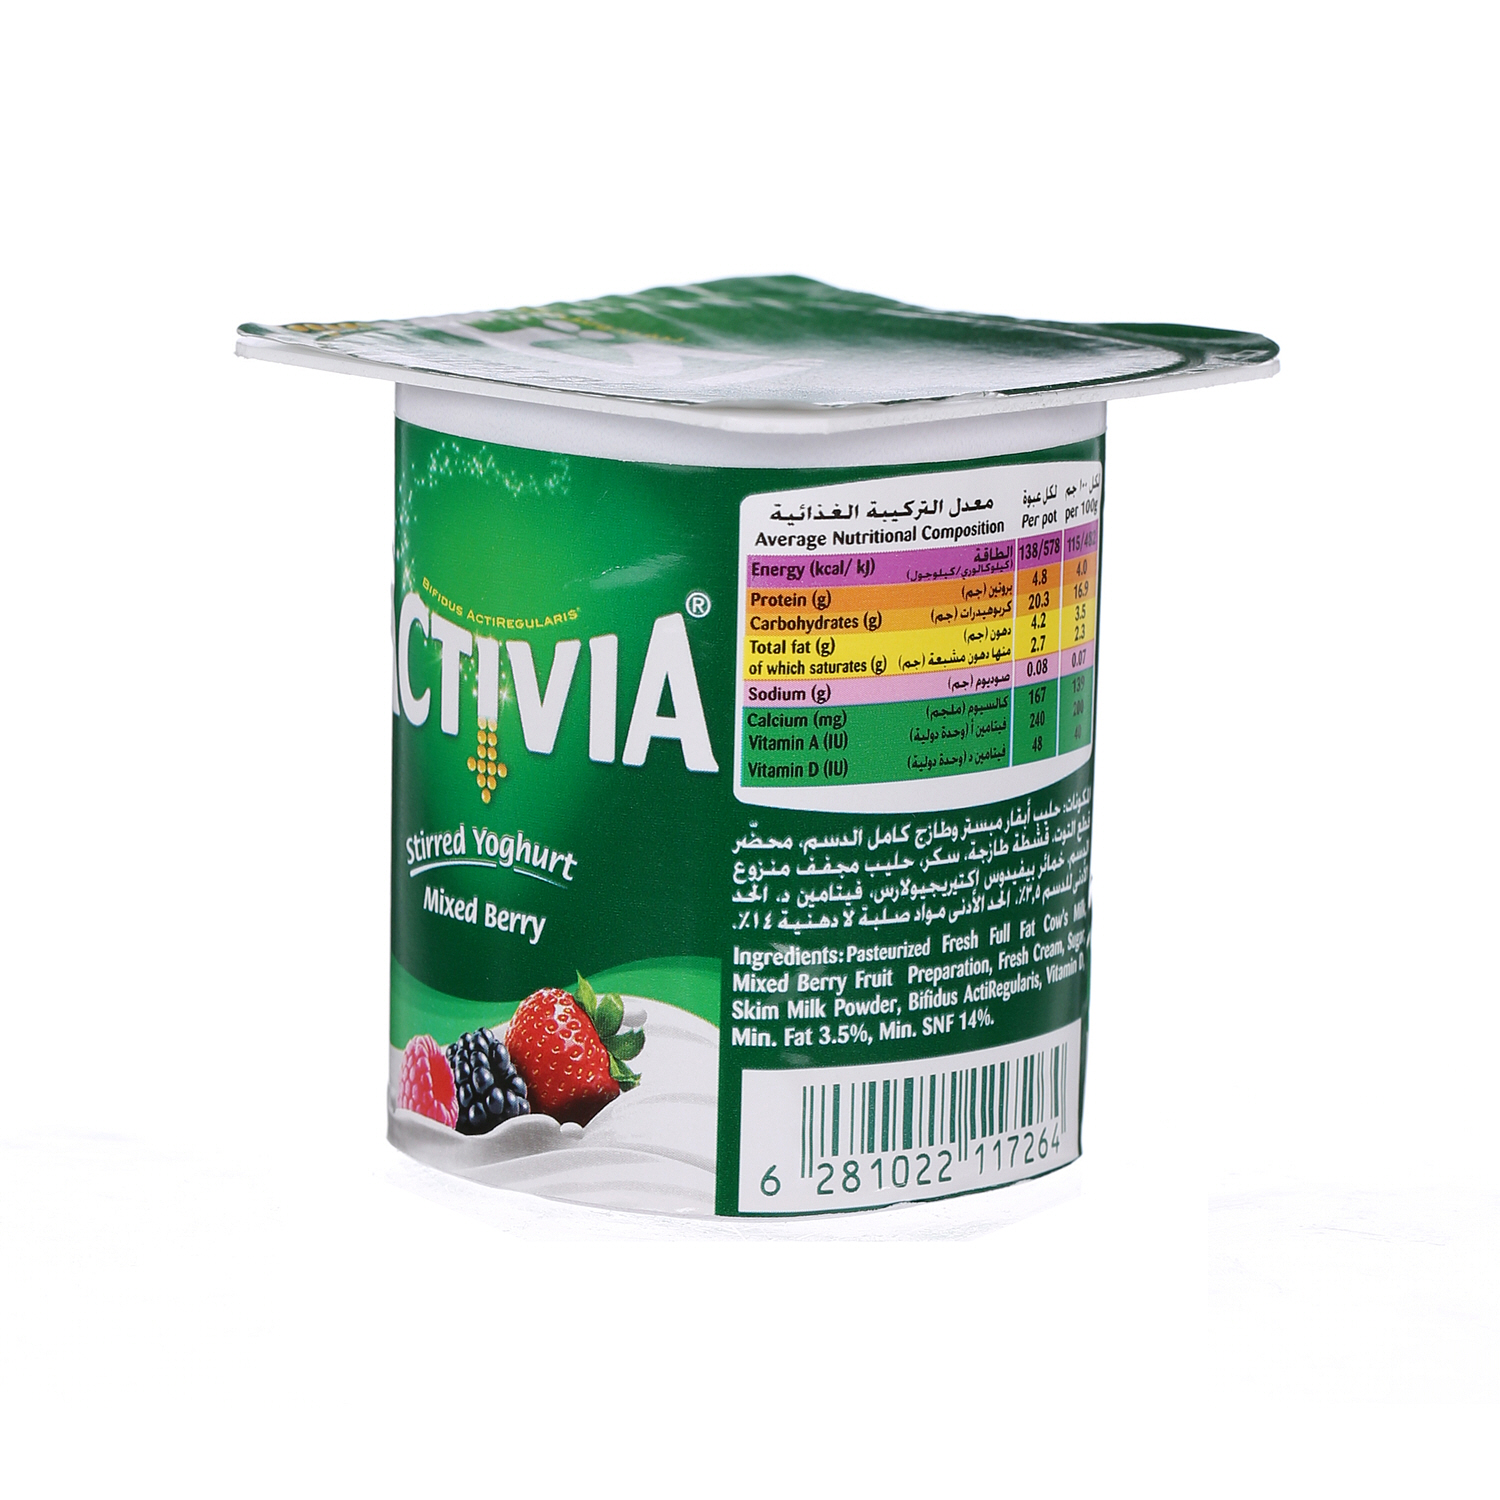 Al Safi Danone Activia Flavoured Youghurt Mixed Berry 120 g